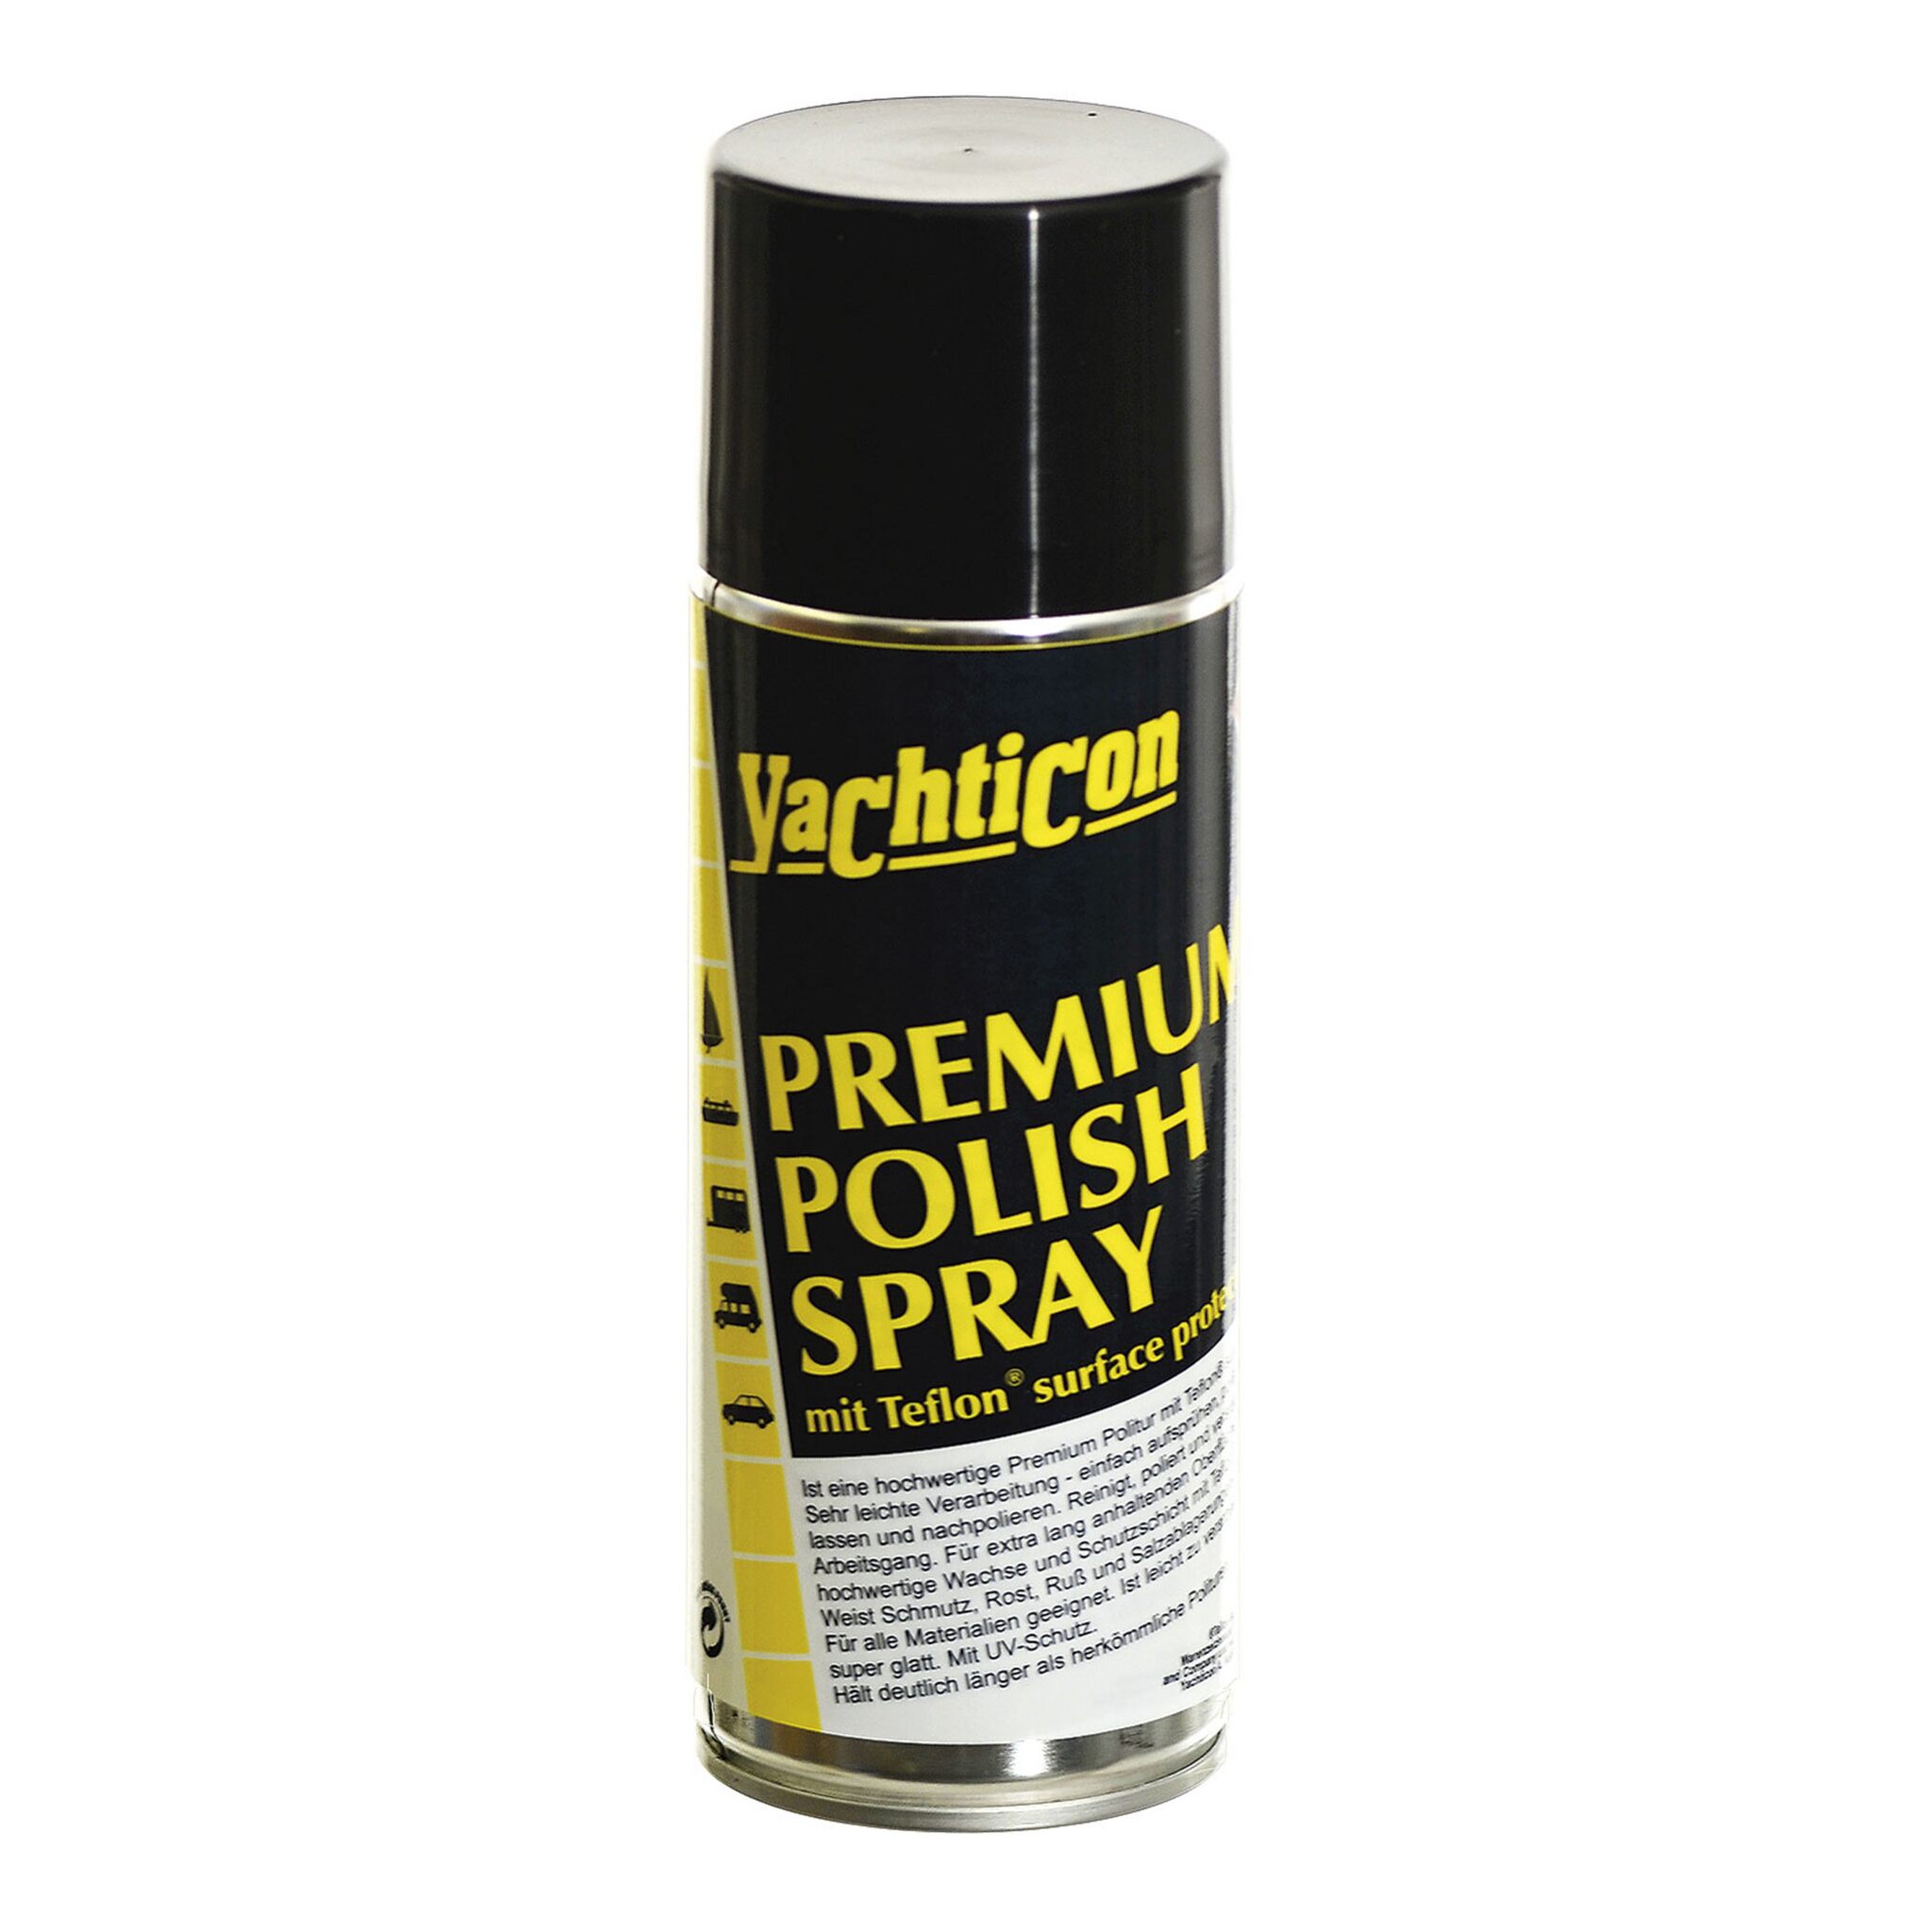 Premium Polish Spray